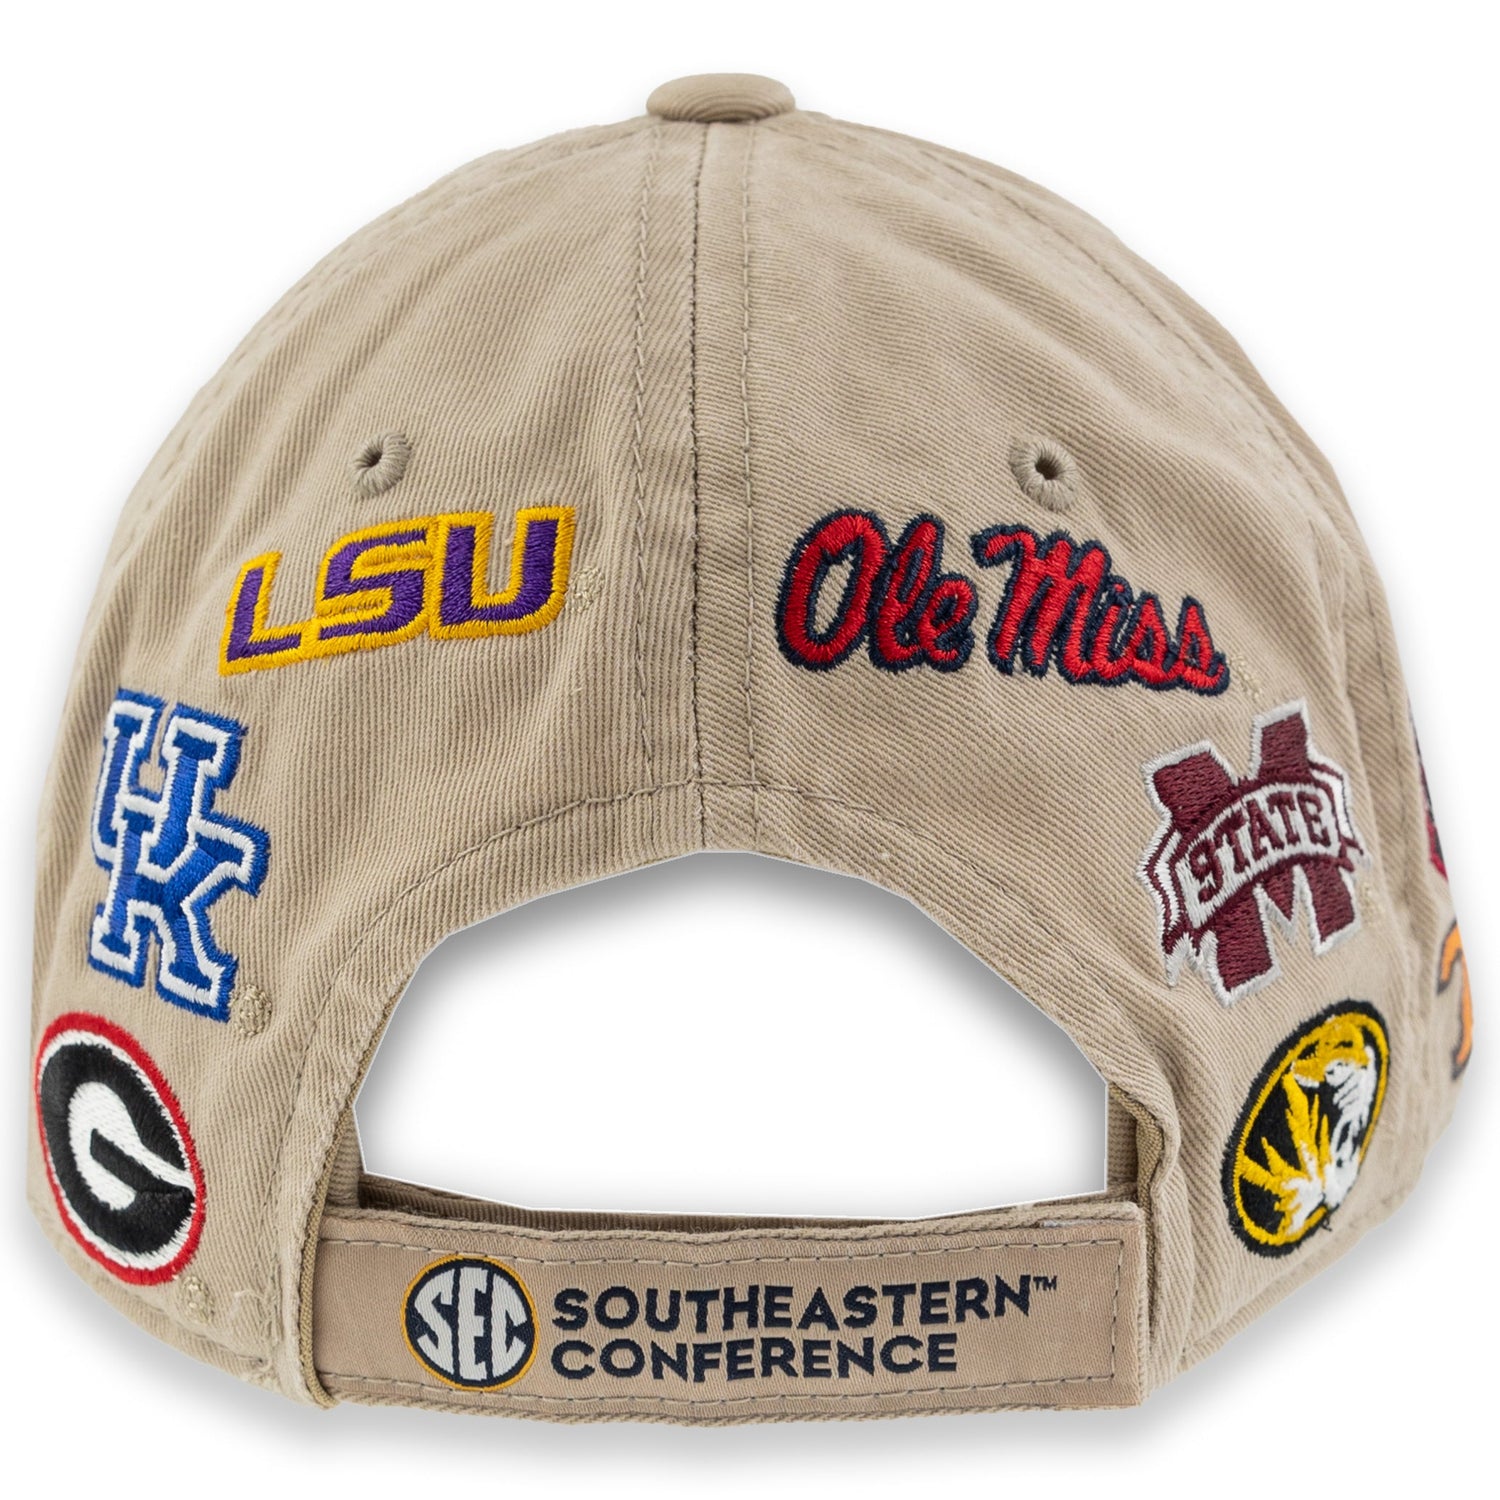 SEC Conference Hat